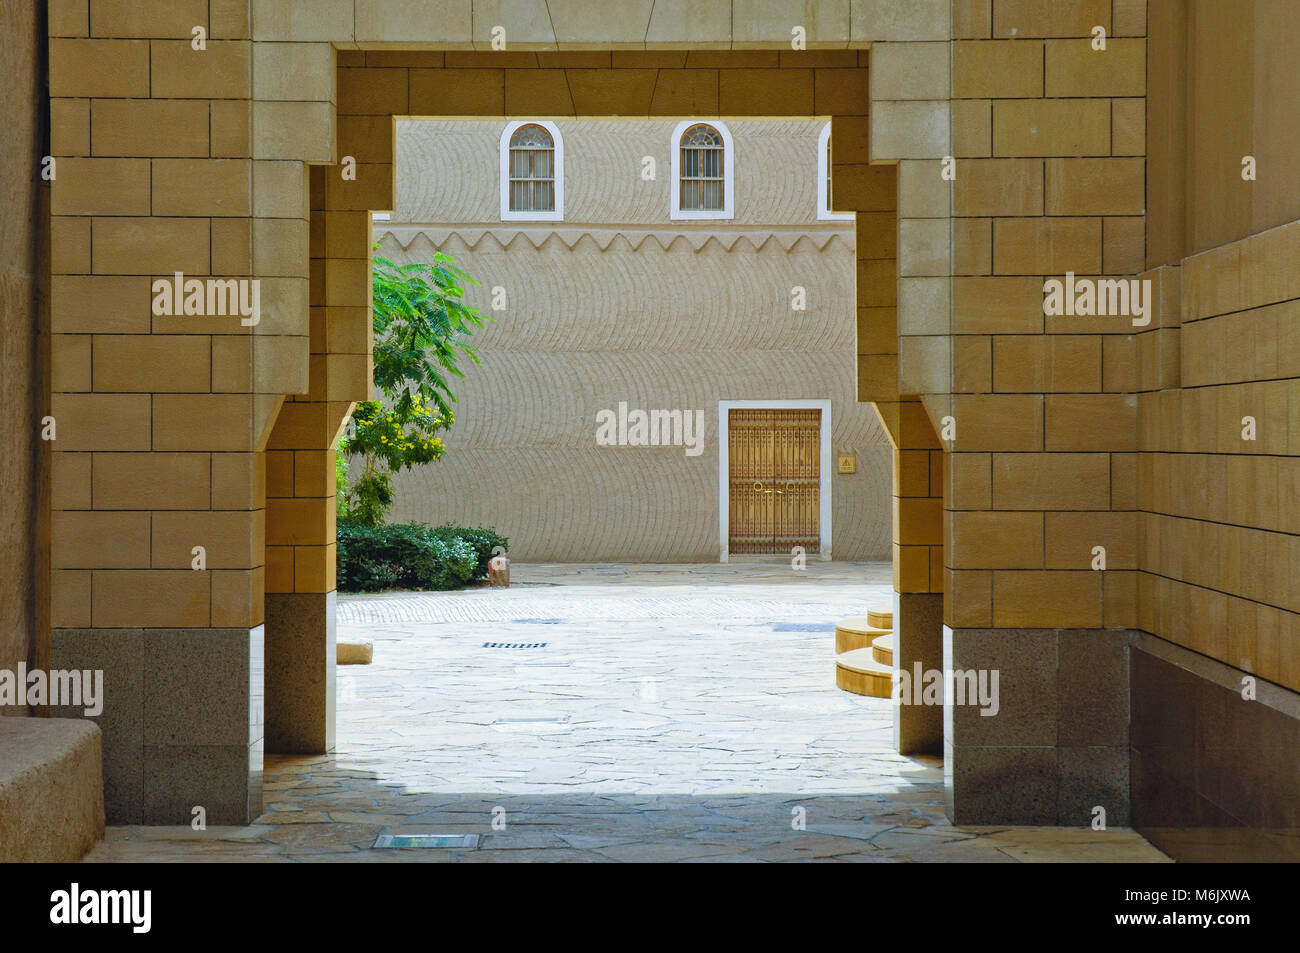 Passage Between Buldings at King Abdul Aziz Historical Center in Riyadh, Saudi Arabia Stock Photo